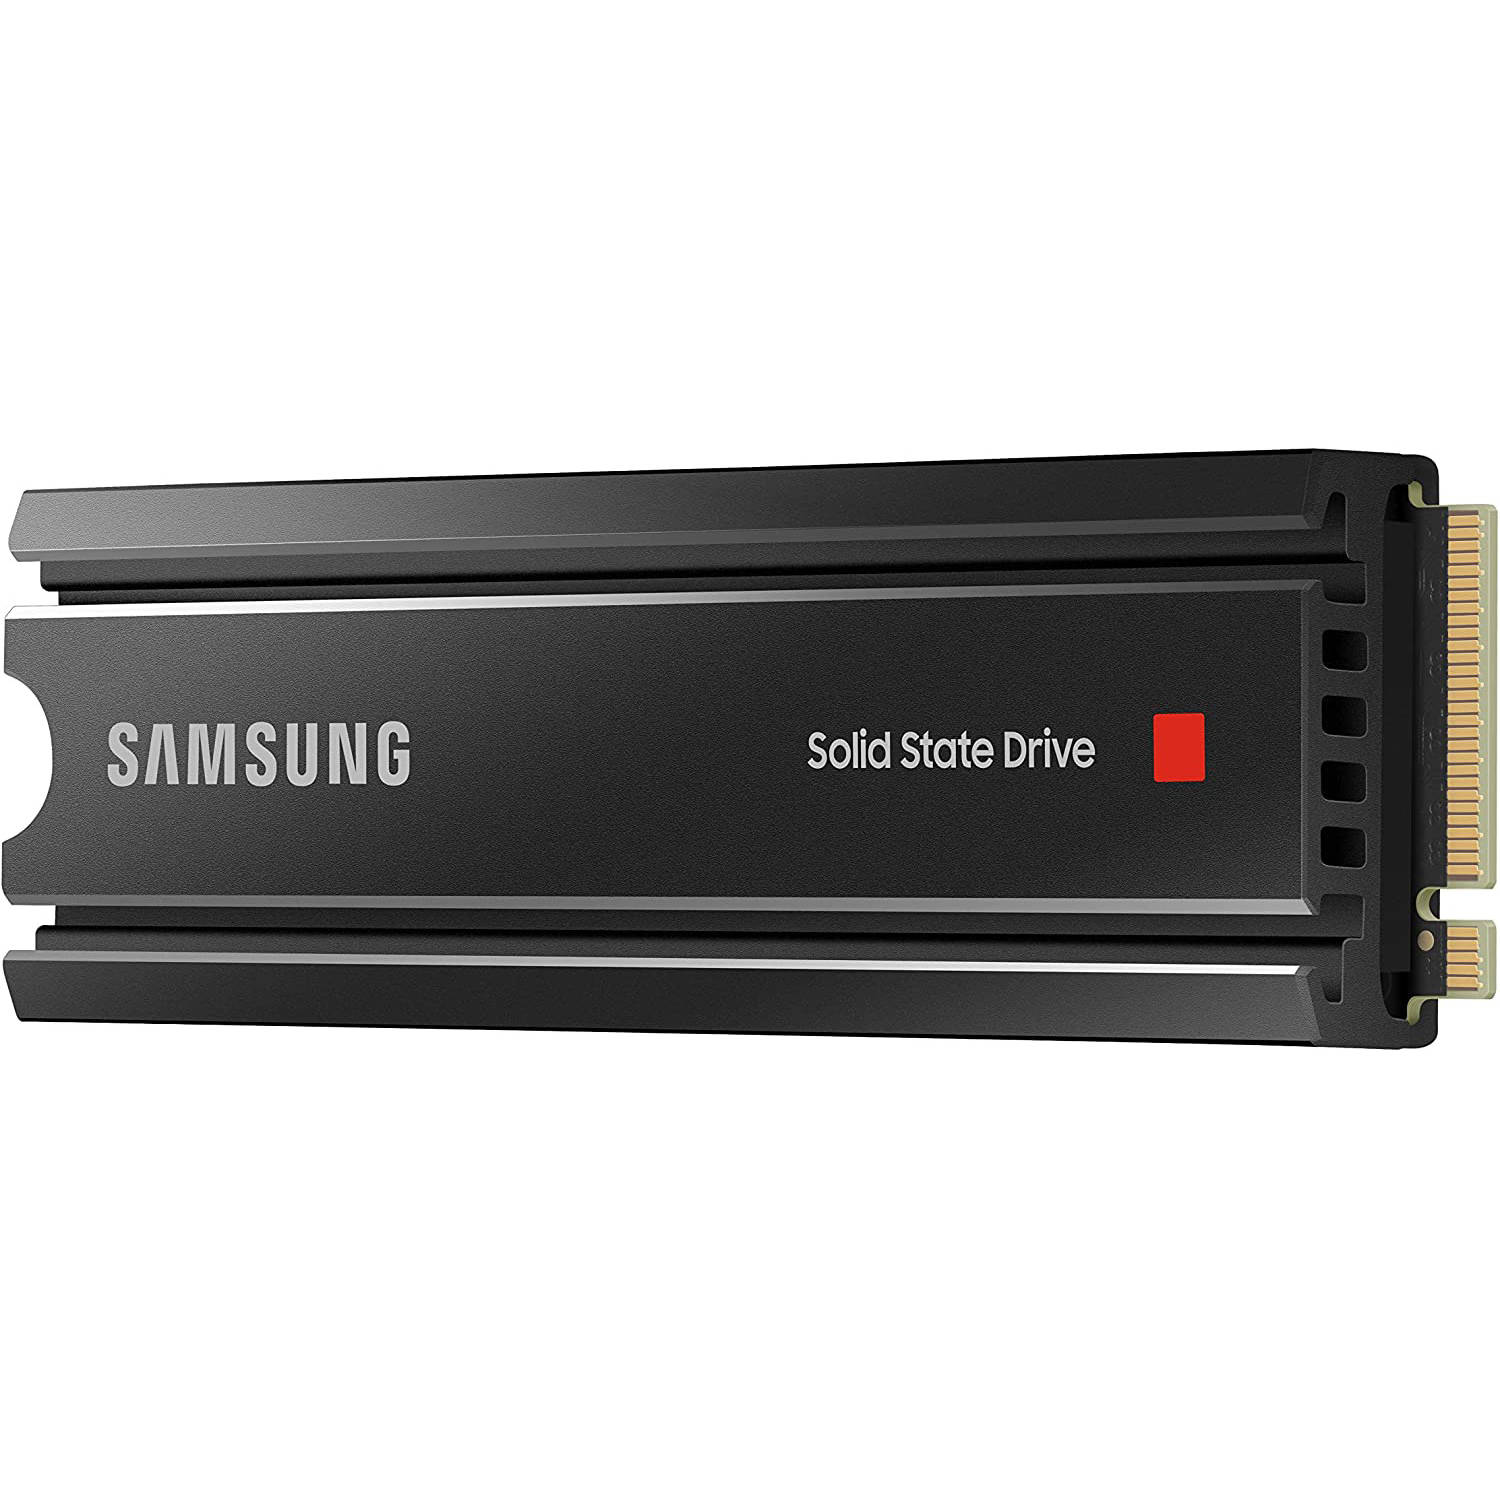 Samsung interne harde schijf 980 Pro met Heatsink (1TB) |